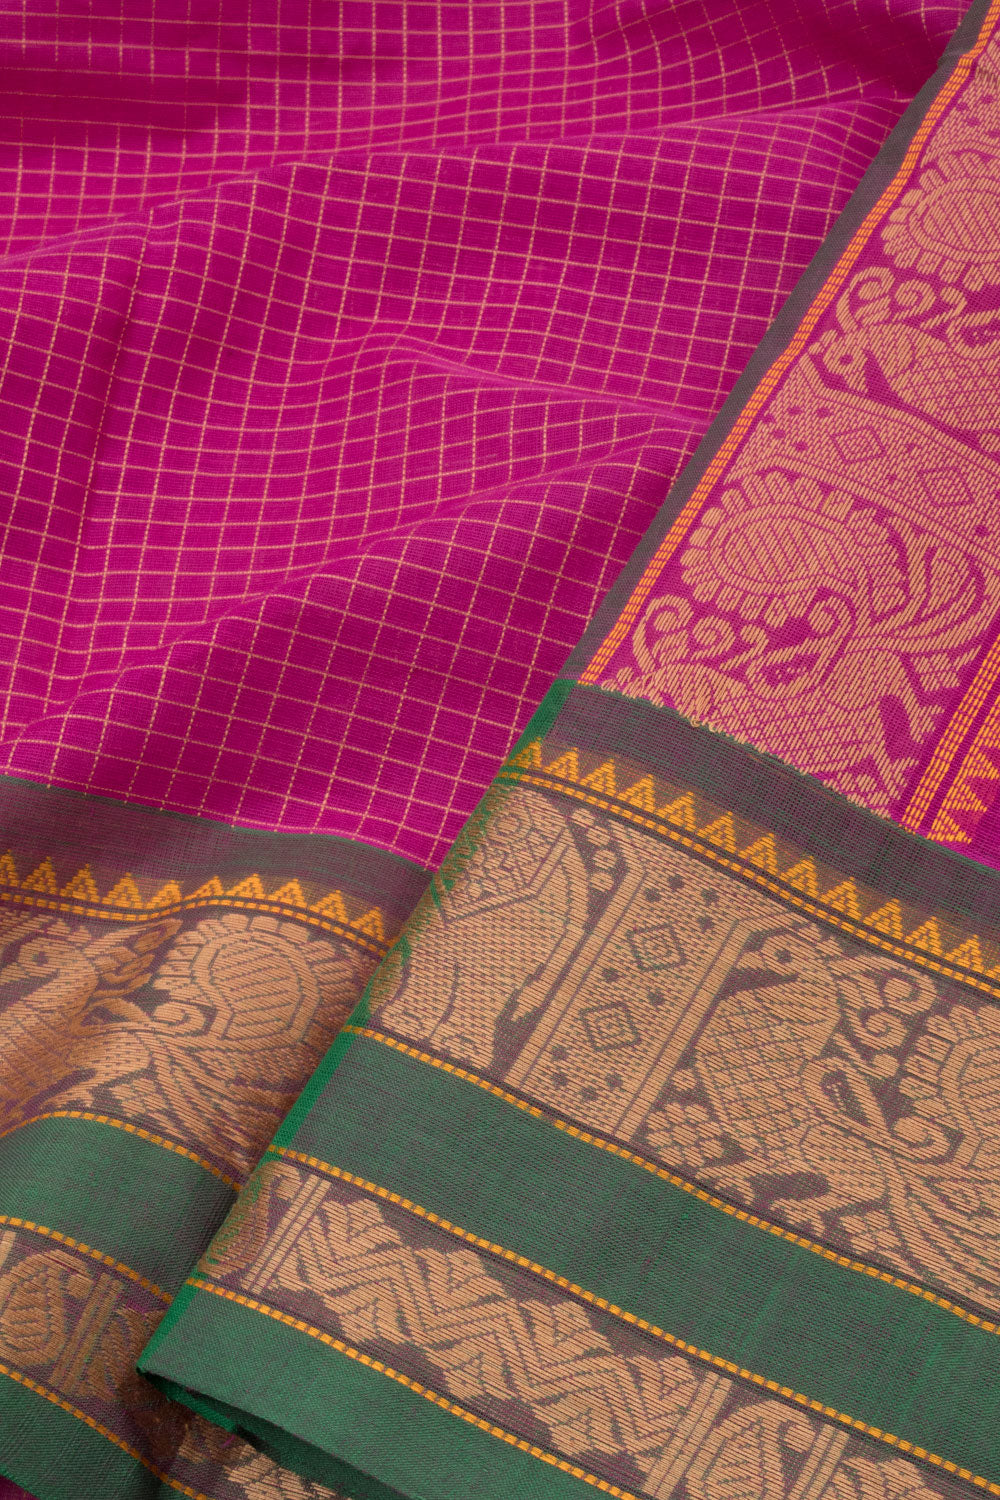  Pink Handwoven Kanchi Cotton Saree - Avishya